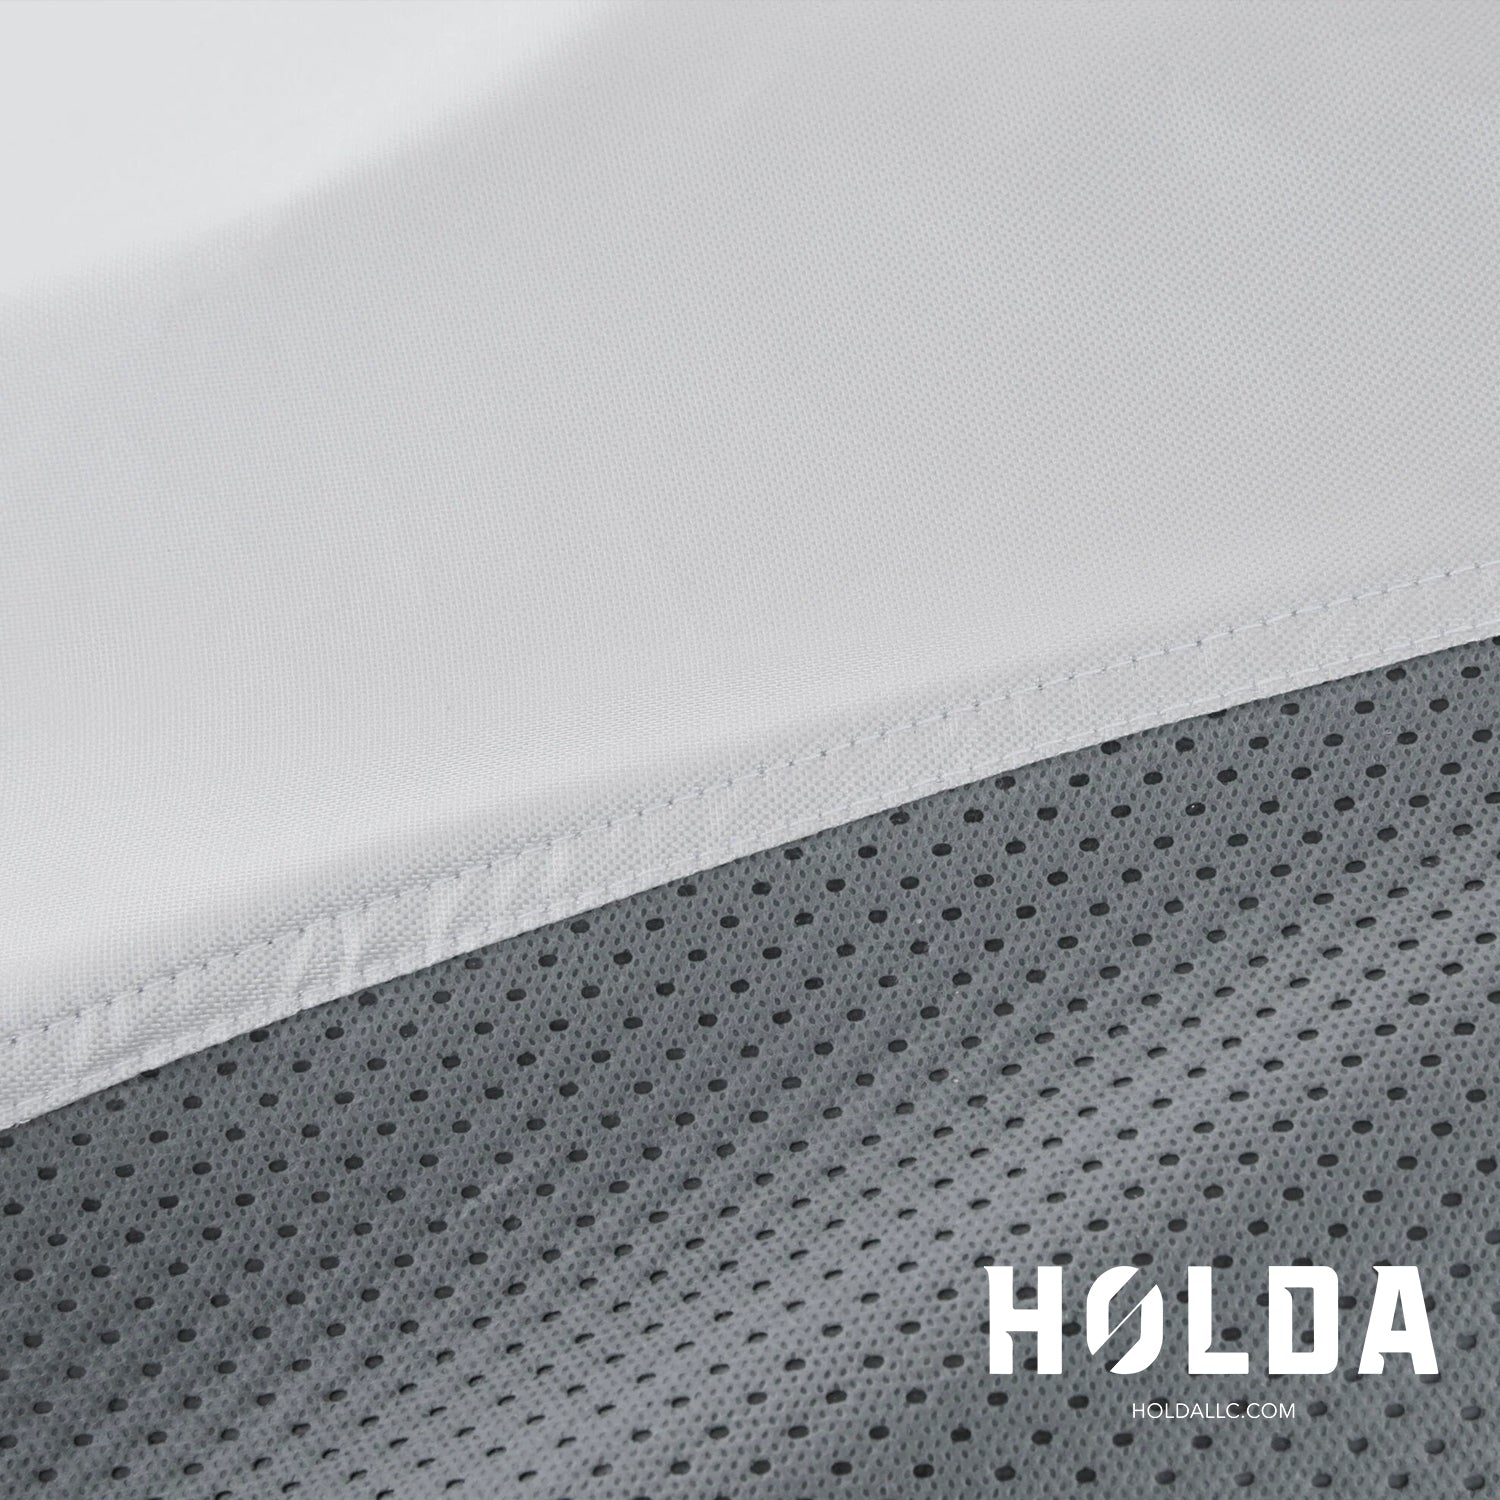 Holda LLC Hybrid Car Cover for Corvette C5 to C7 Corvette - Partsaccessoriesusa